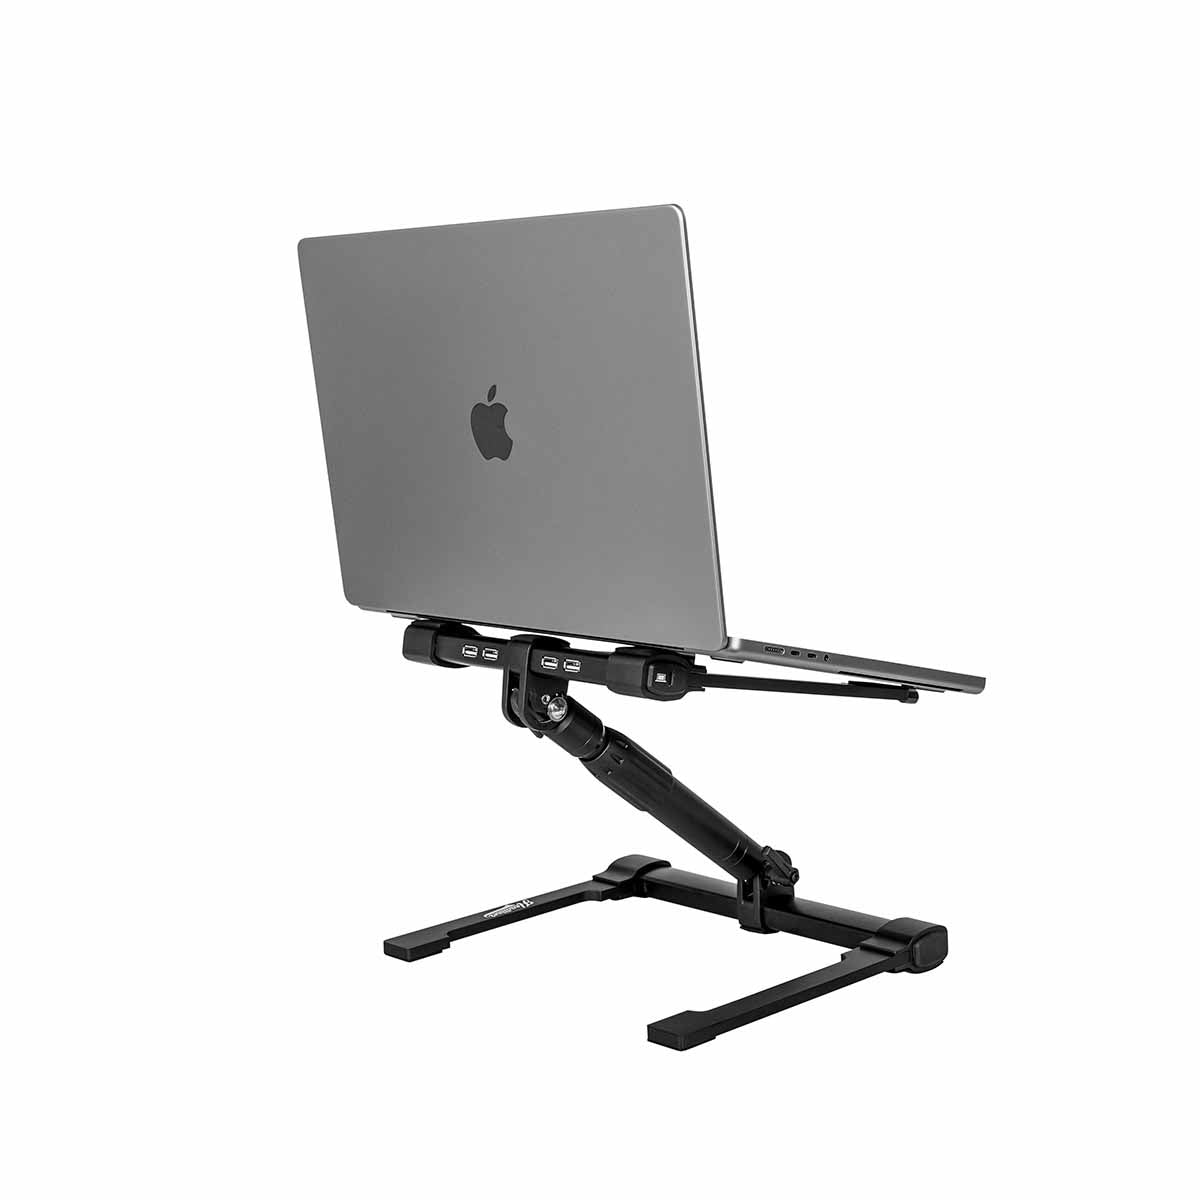 HEADLINER Gigastand USB Laptop Stand